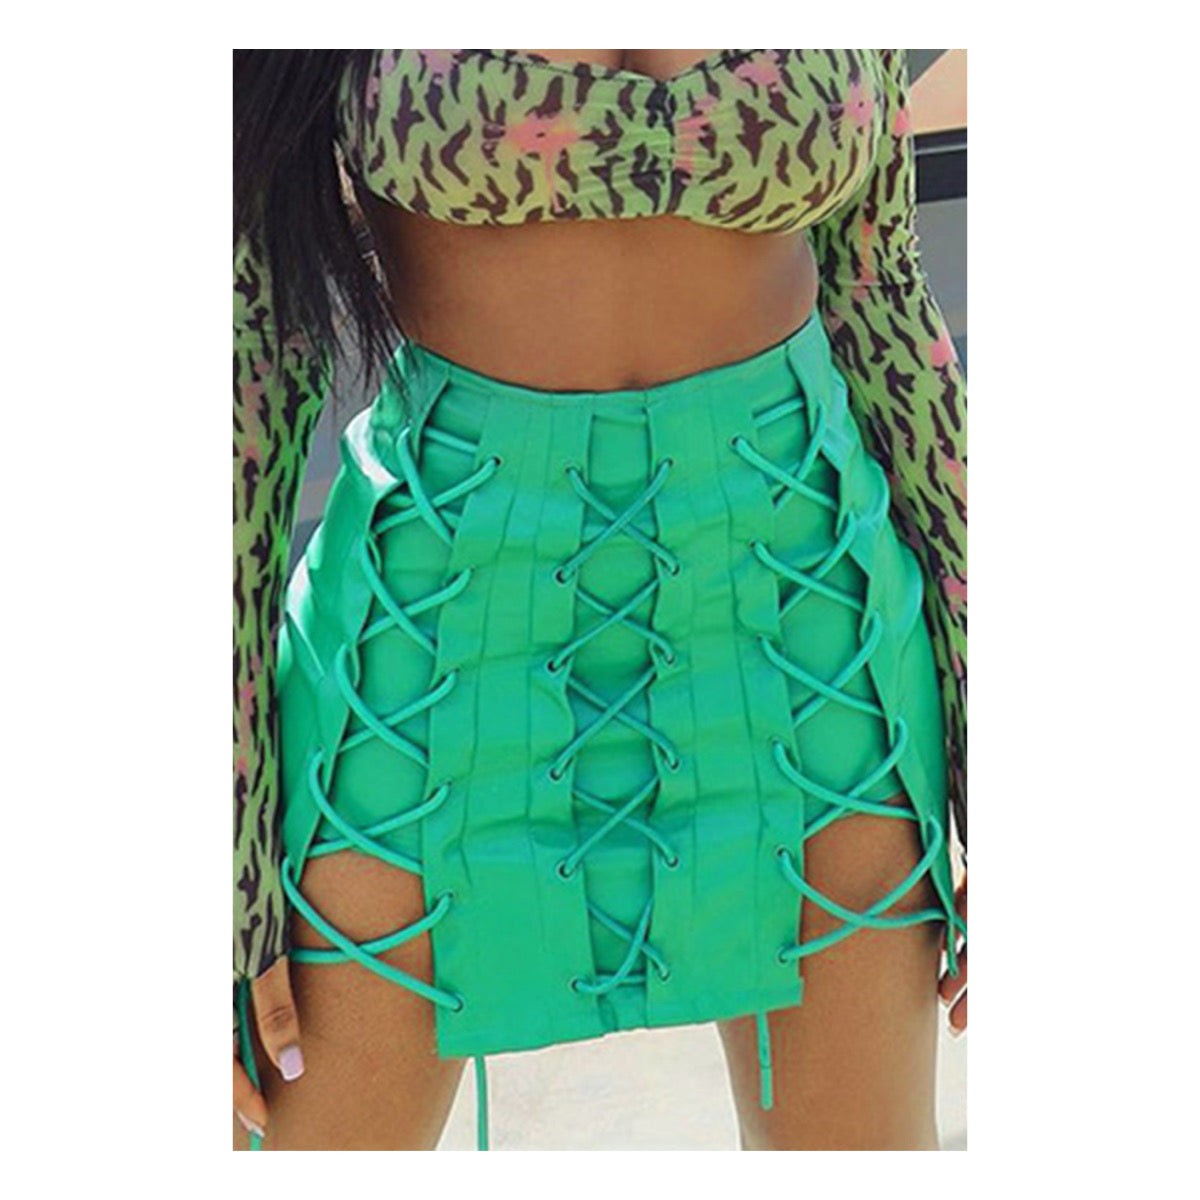 Green “Lace Up” Mini Skirt